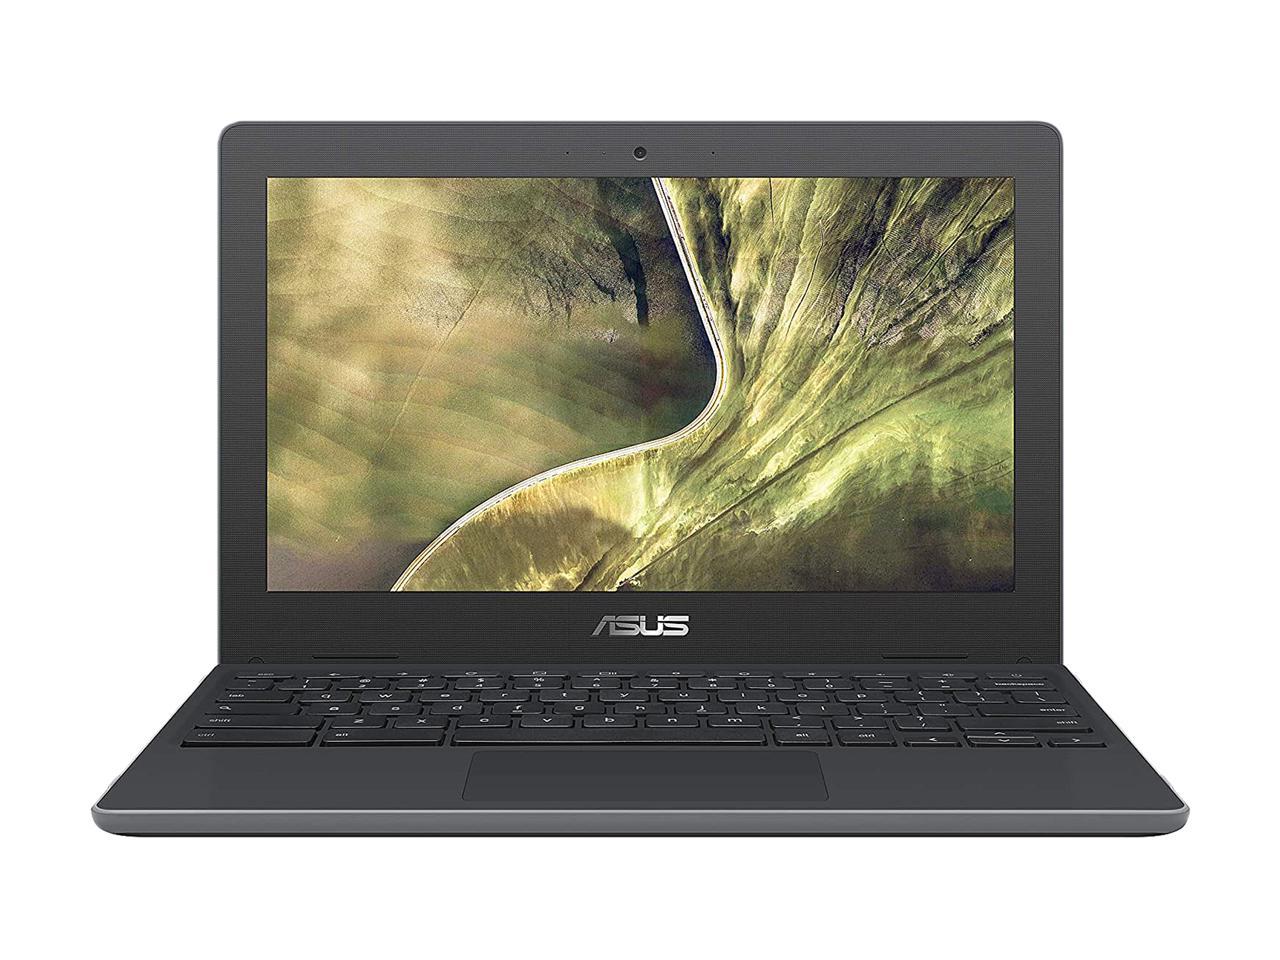 ASUS C204EE YS01 Chromebook Intel Celeron N4000 (1.10 GHz) 4 GB Memory 16 GB SSD 11.6" Chrome OS